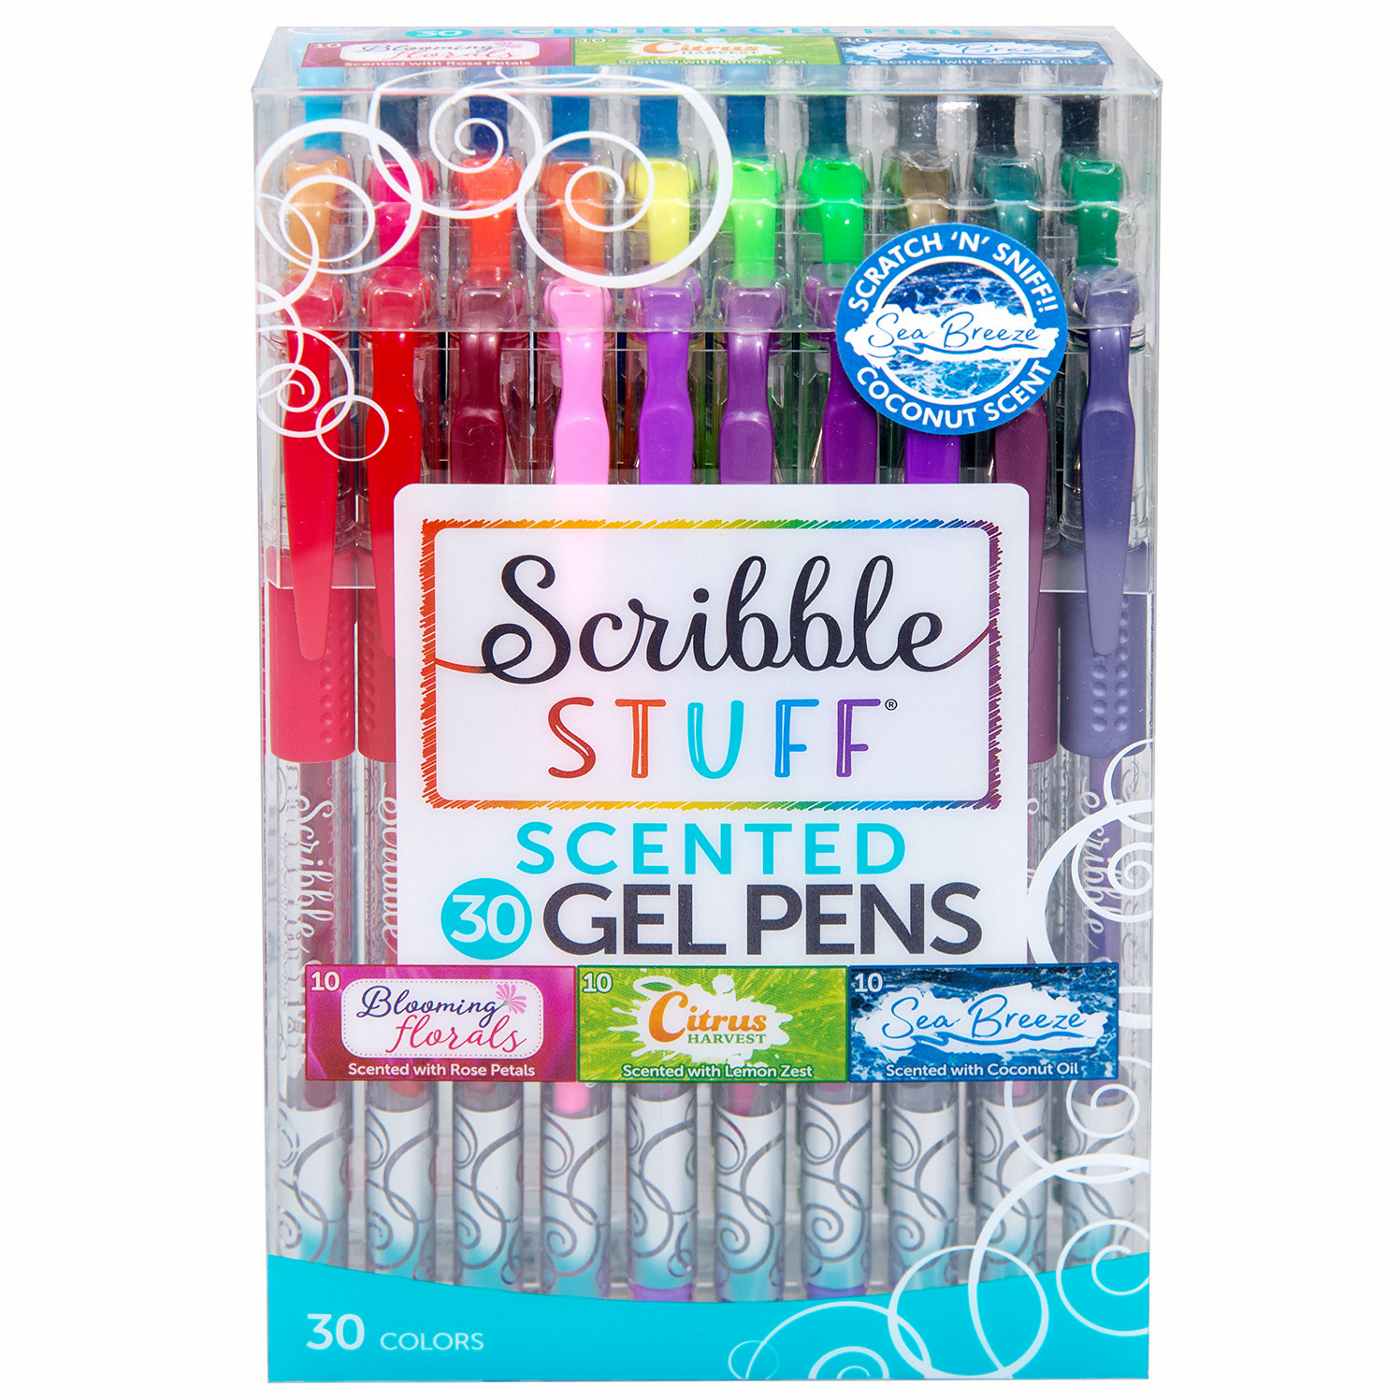  Scribble Stuff Pens